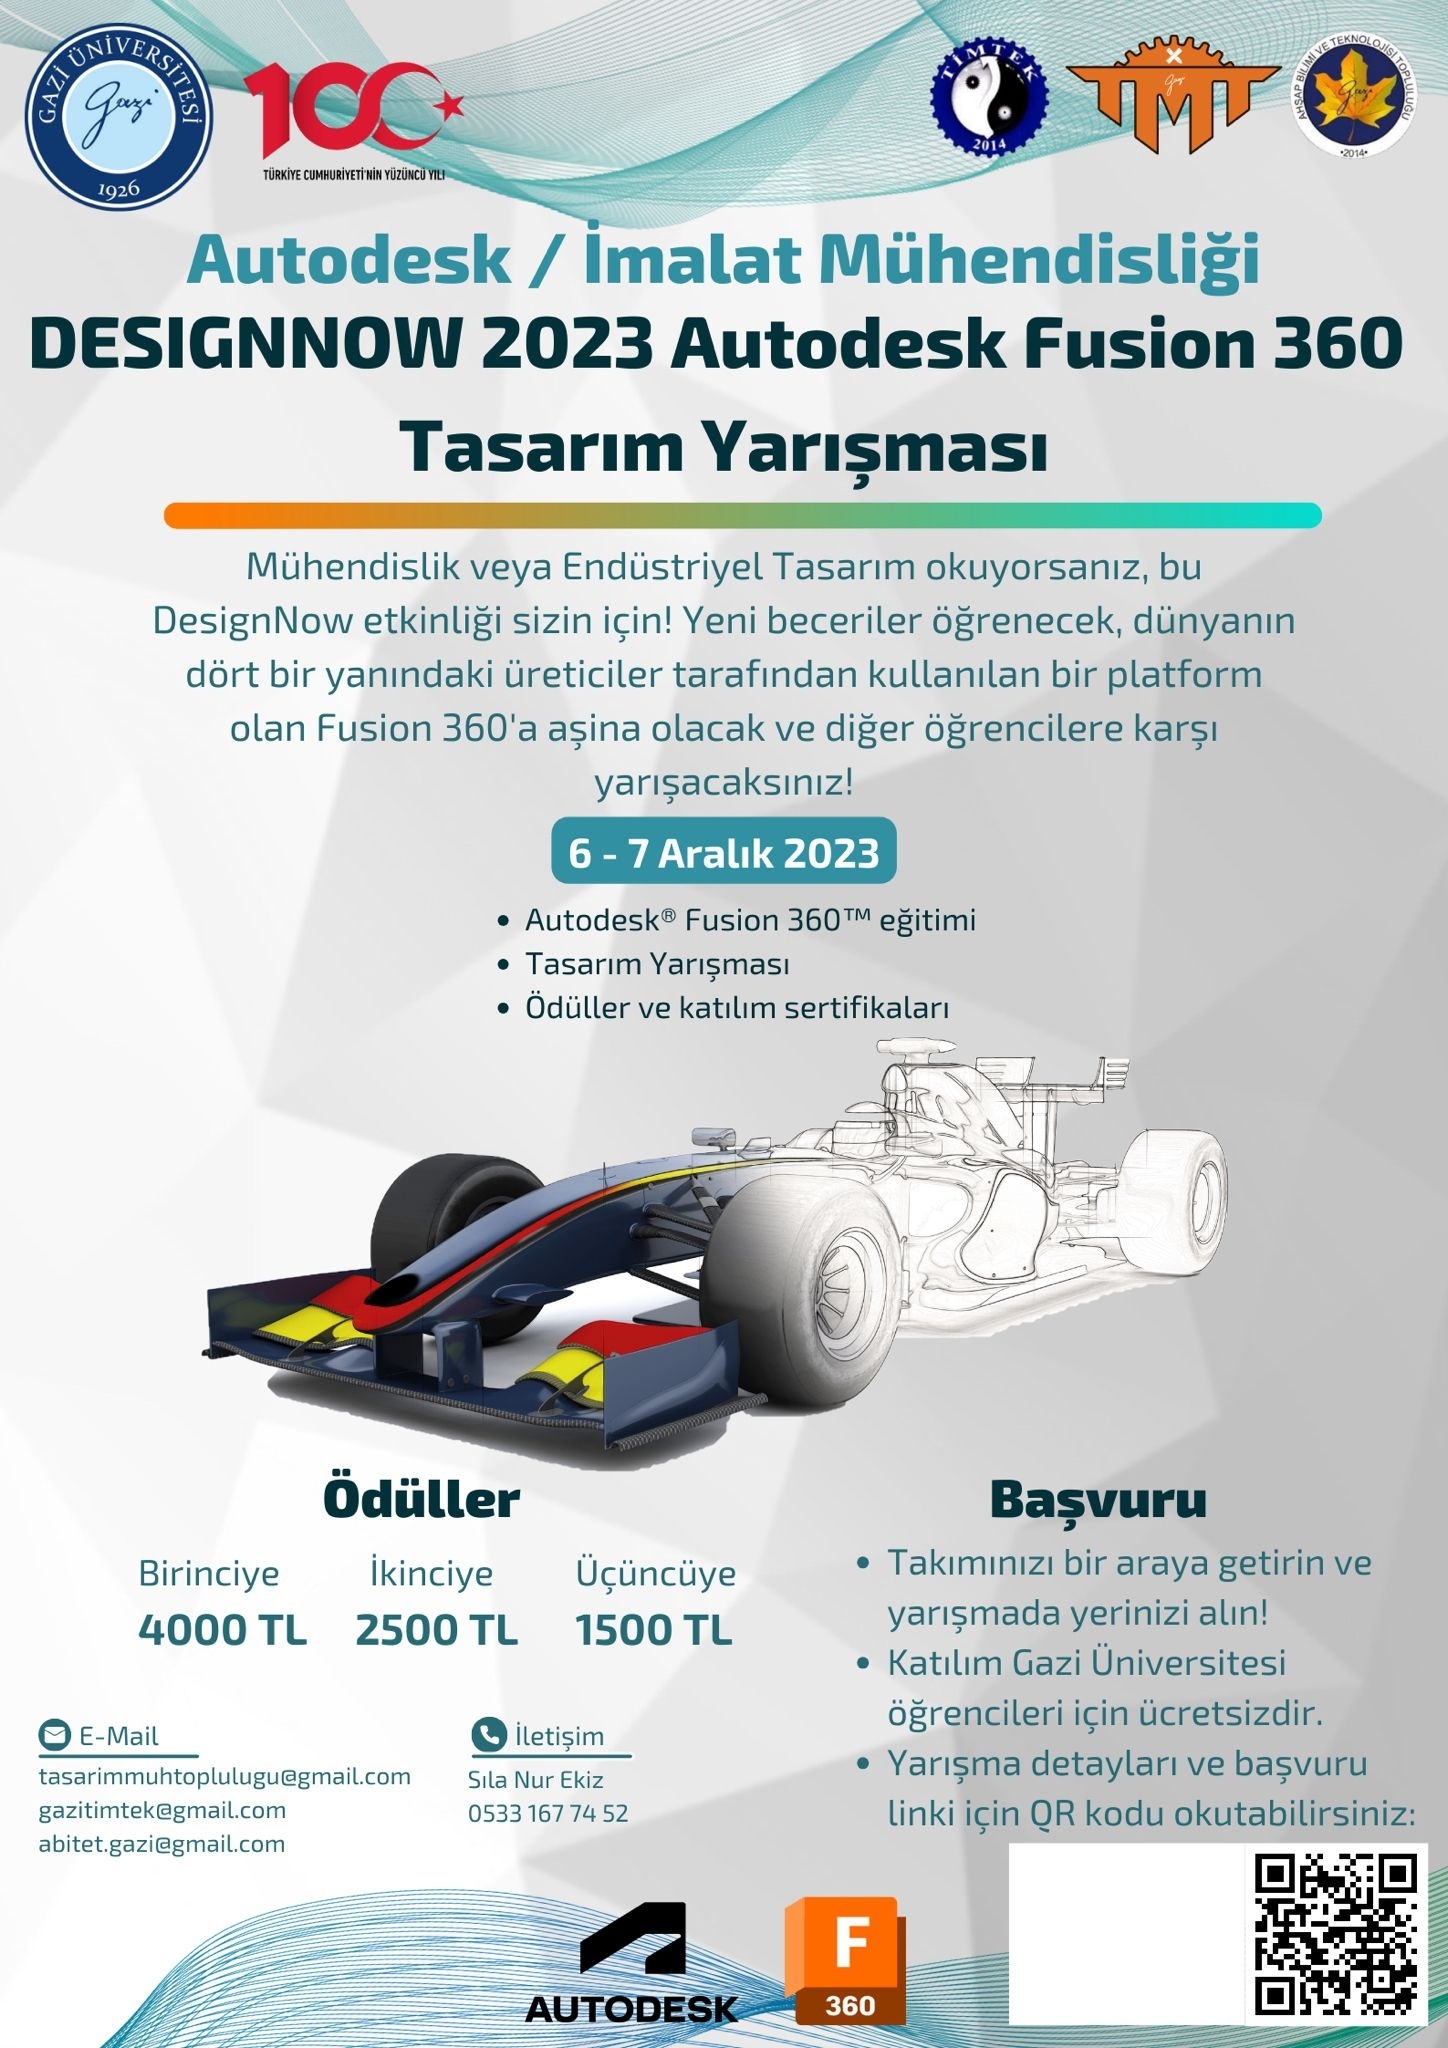 DESIGNNOW 2023 AUTODESK FUSION 360 TASARIM YARIŞMASI